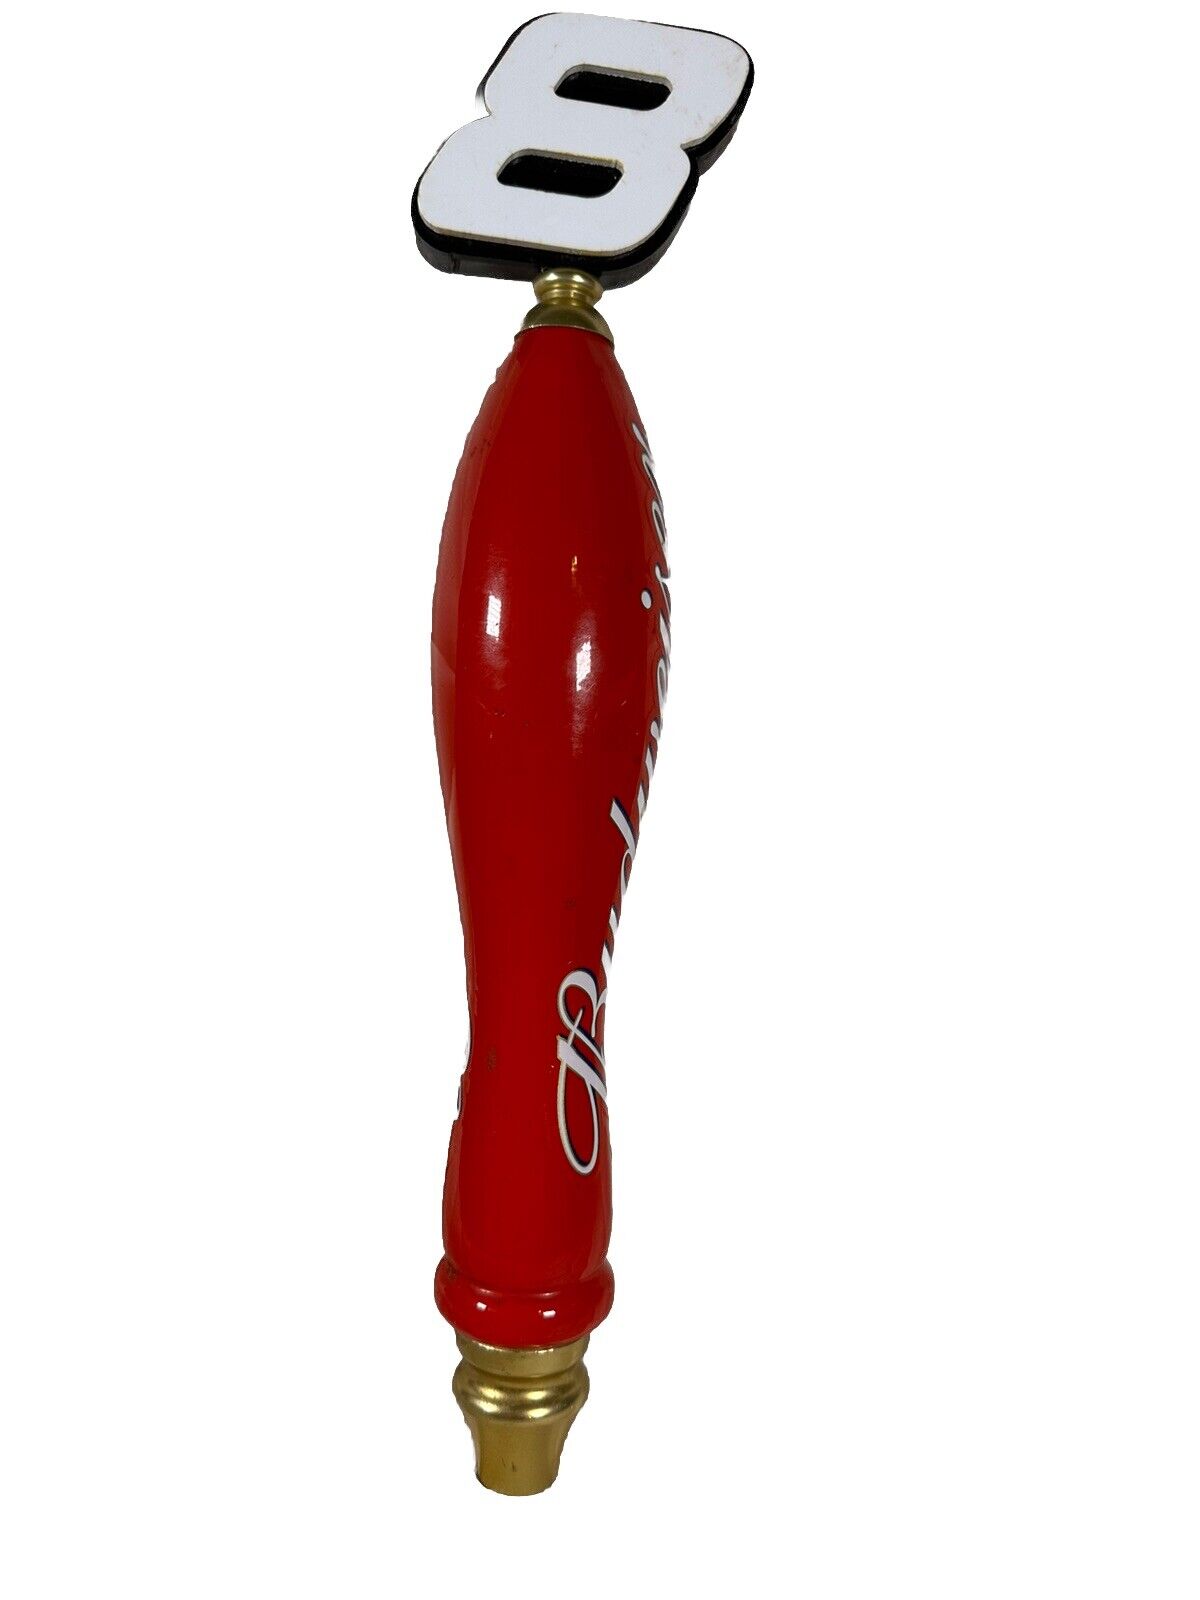 Dale Earnhardt Jr #8 red Budweiser beer tap handle RARE